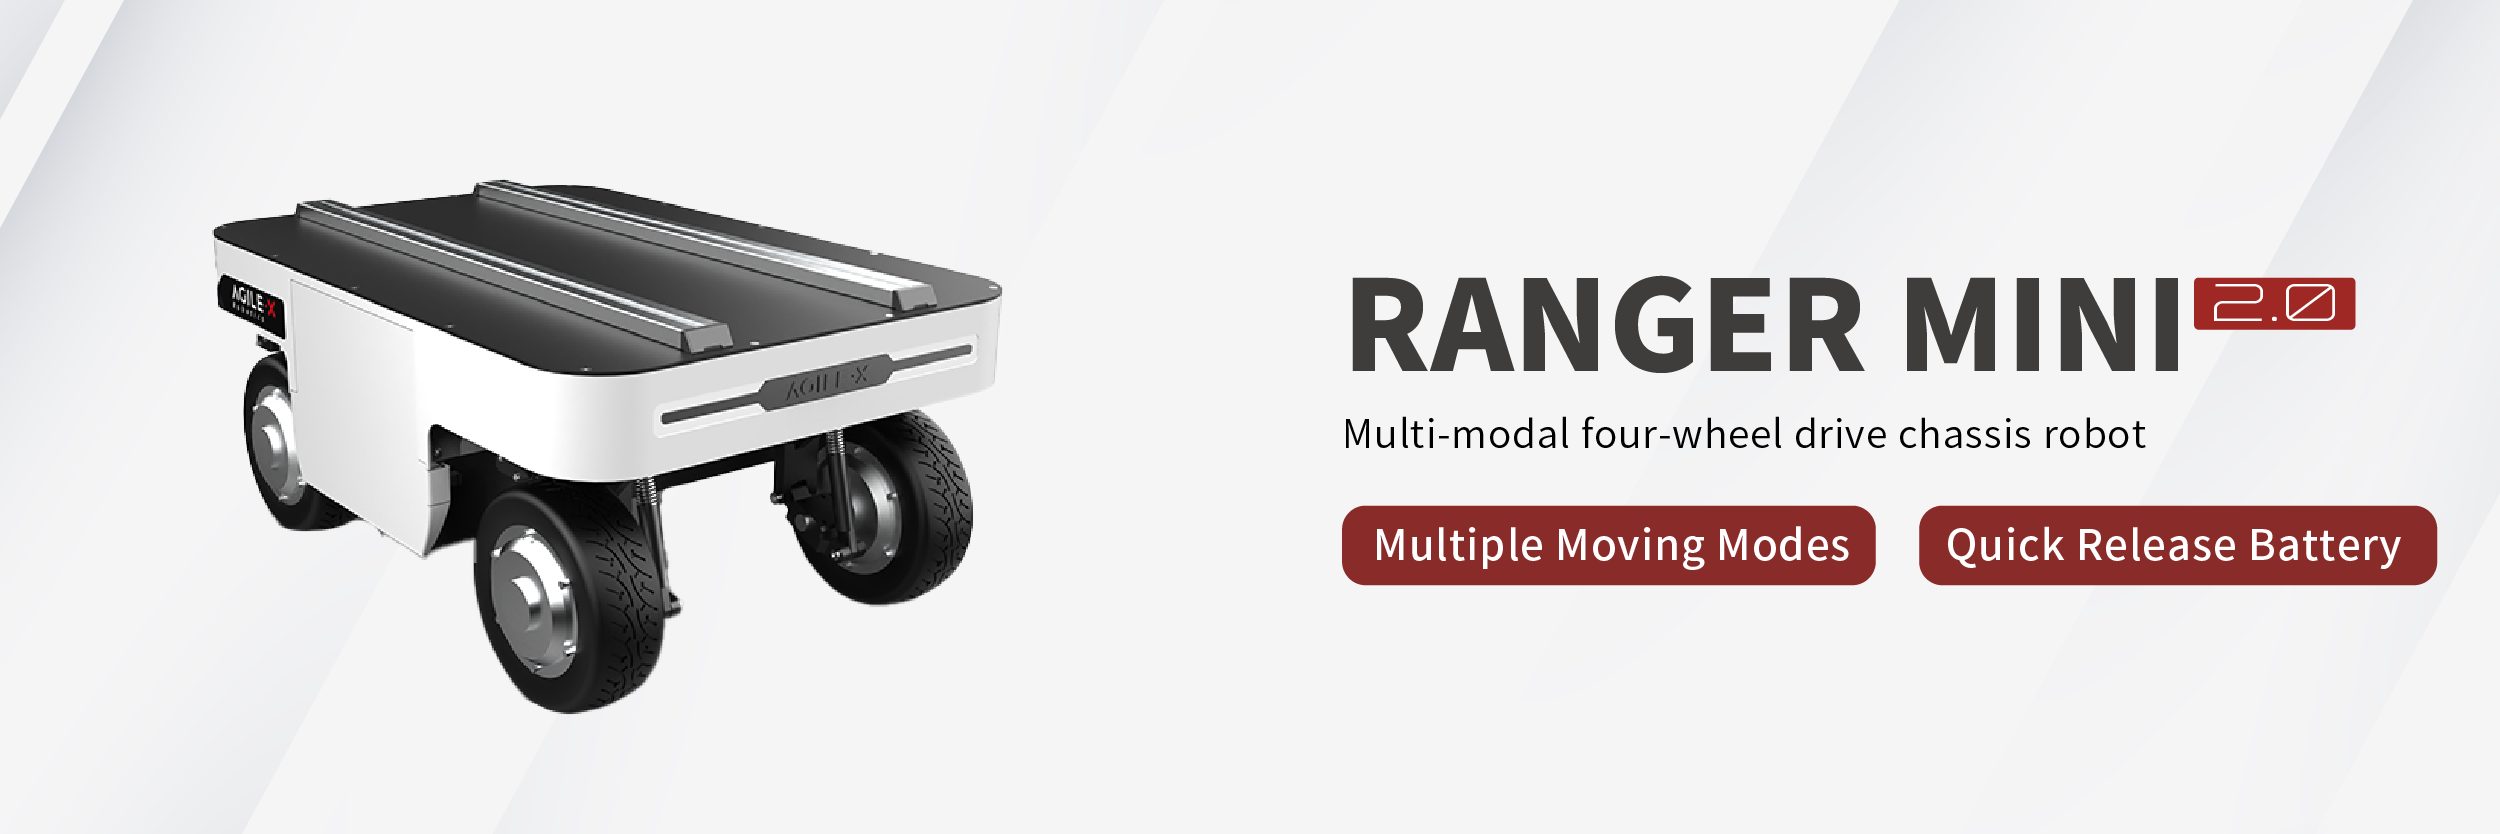 AgileX Ranger Mini 2.0_banner